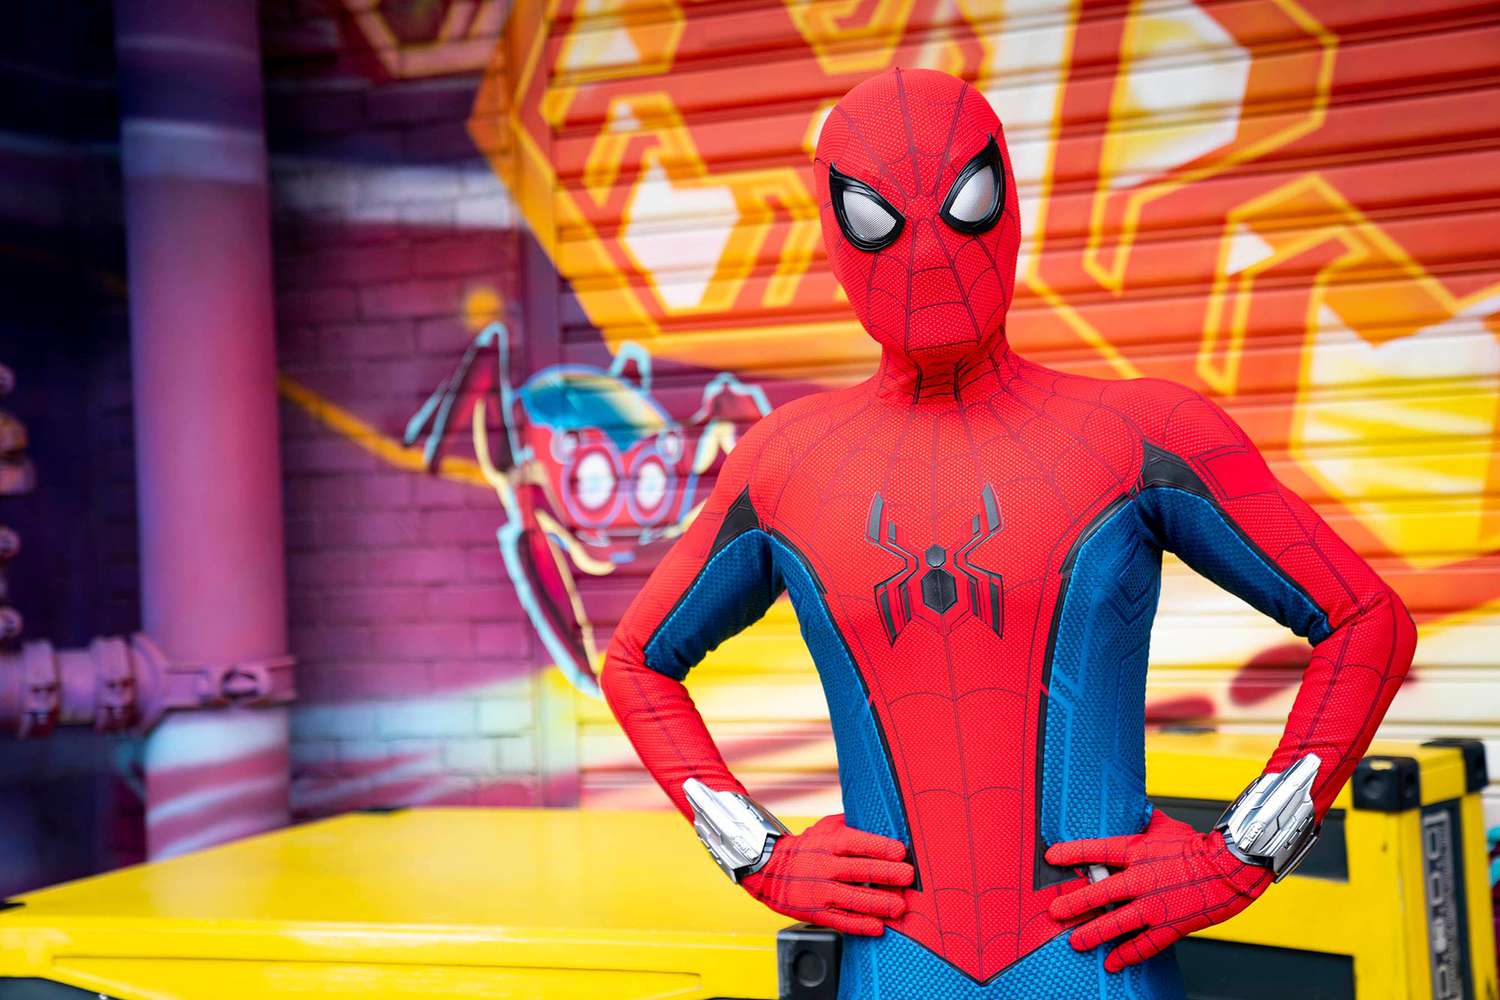 Spider-man at Disneyland's Avengers Campus